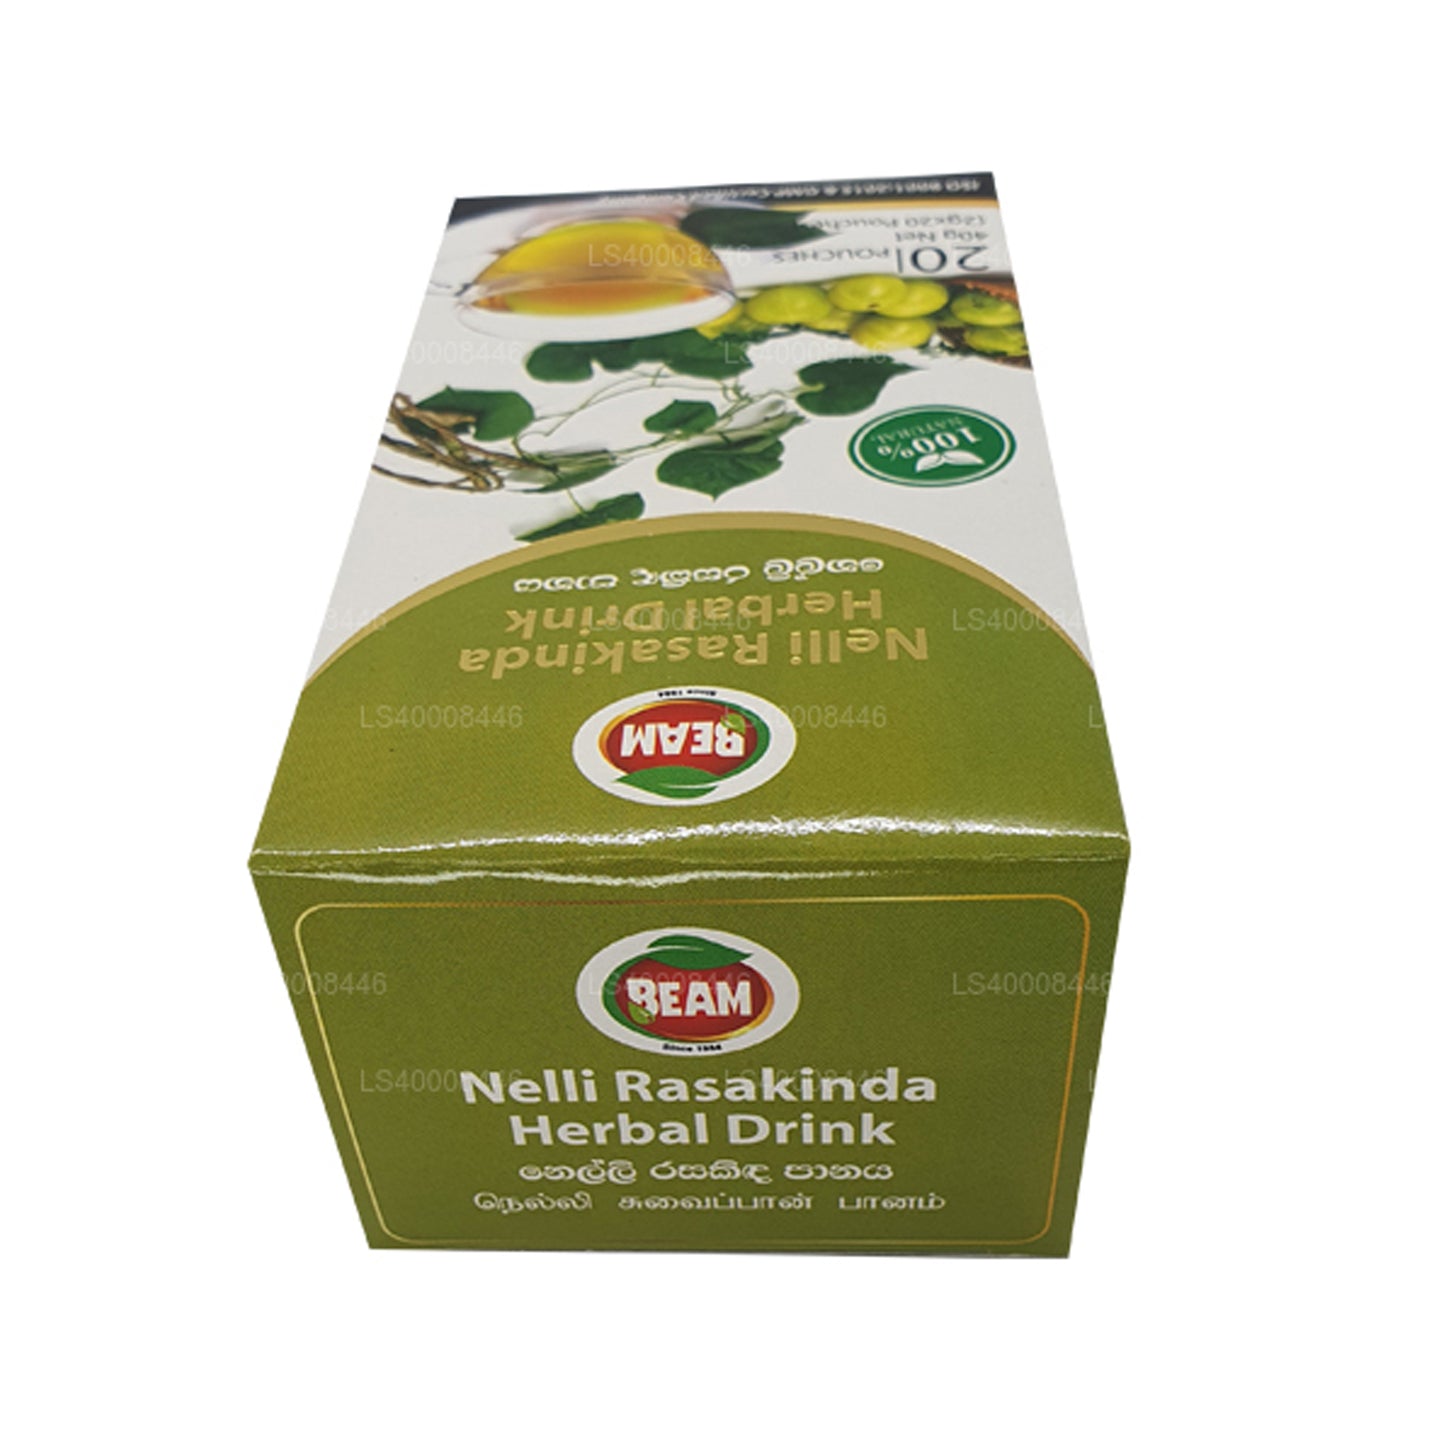 Beam Nelli Rasakinda Herbal Drink (40g) 20 Tea Bags